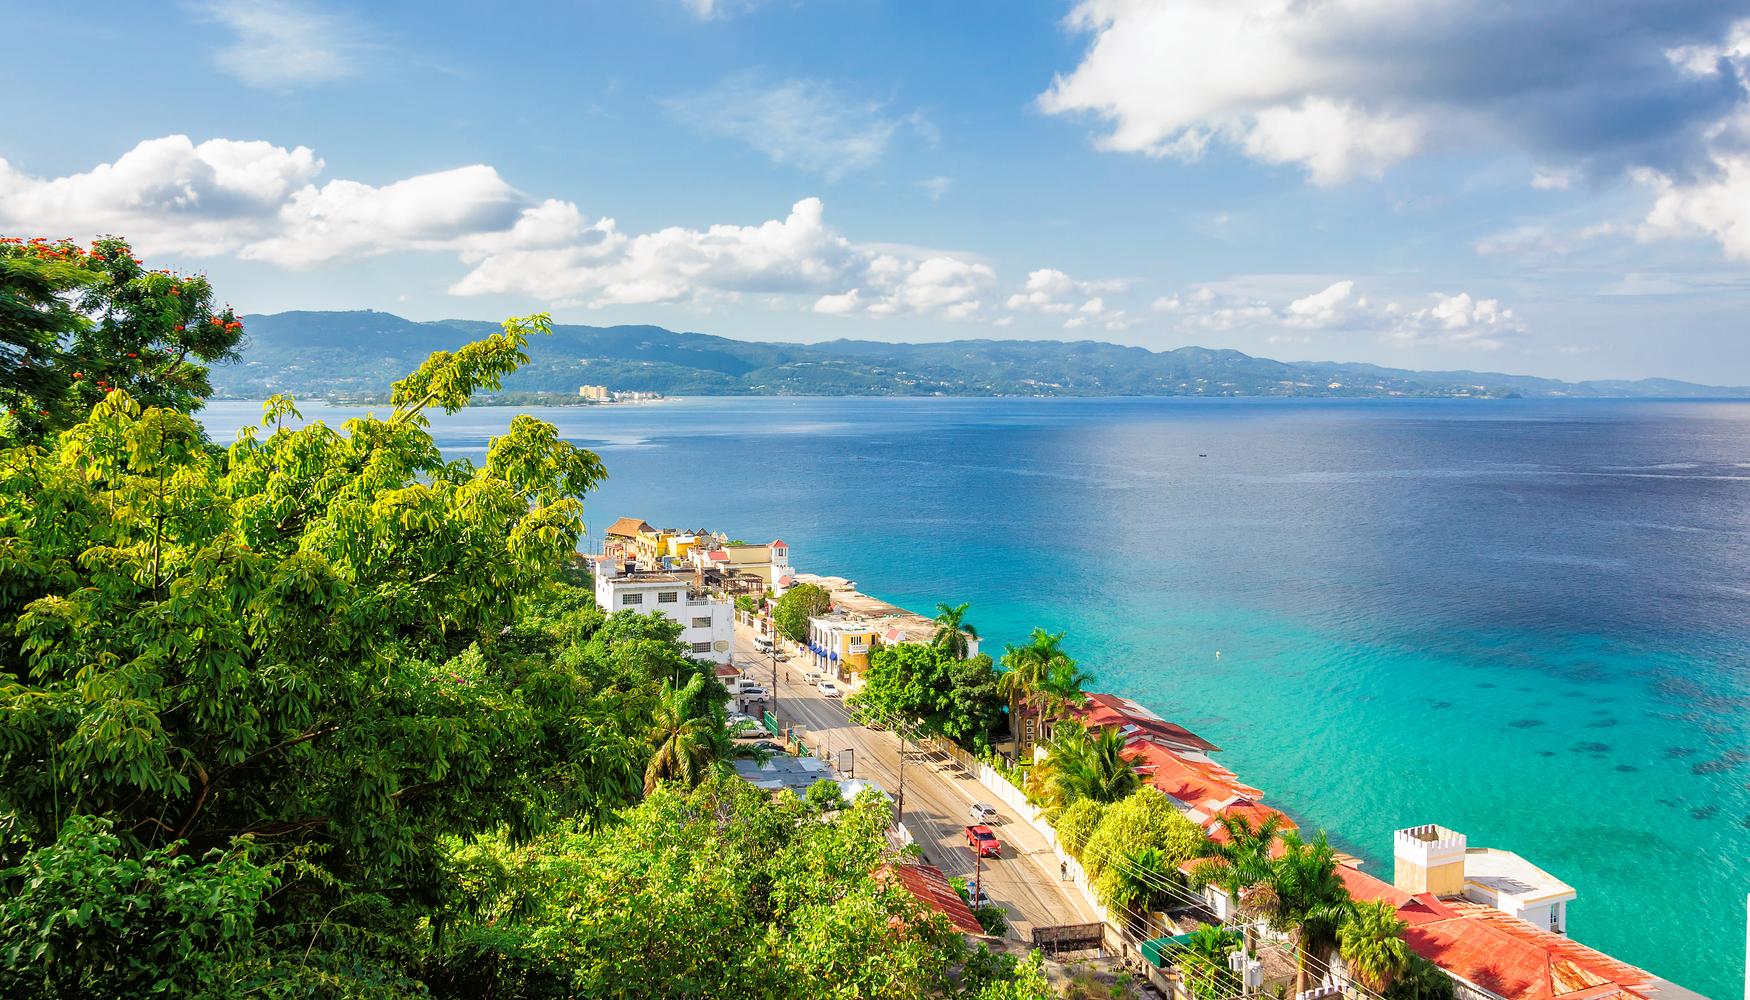 Jamaica pakketreizen vanaf € 962 Vind vlucht+hotel op KAYAK